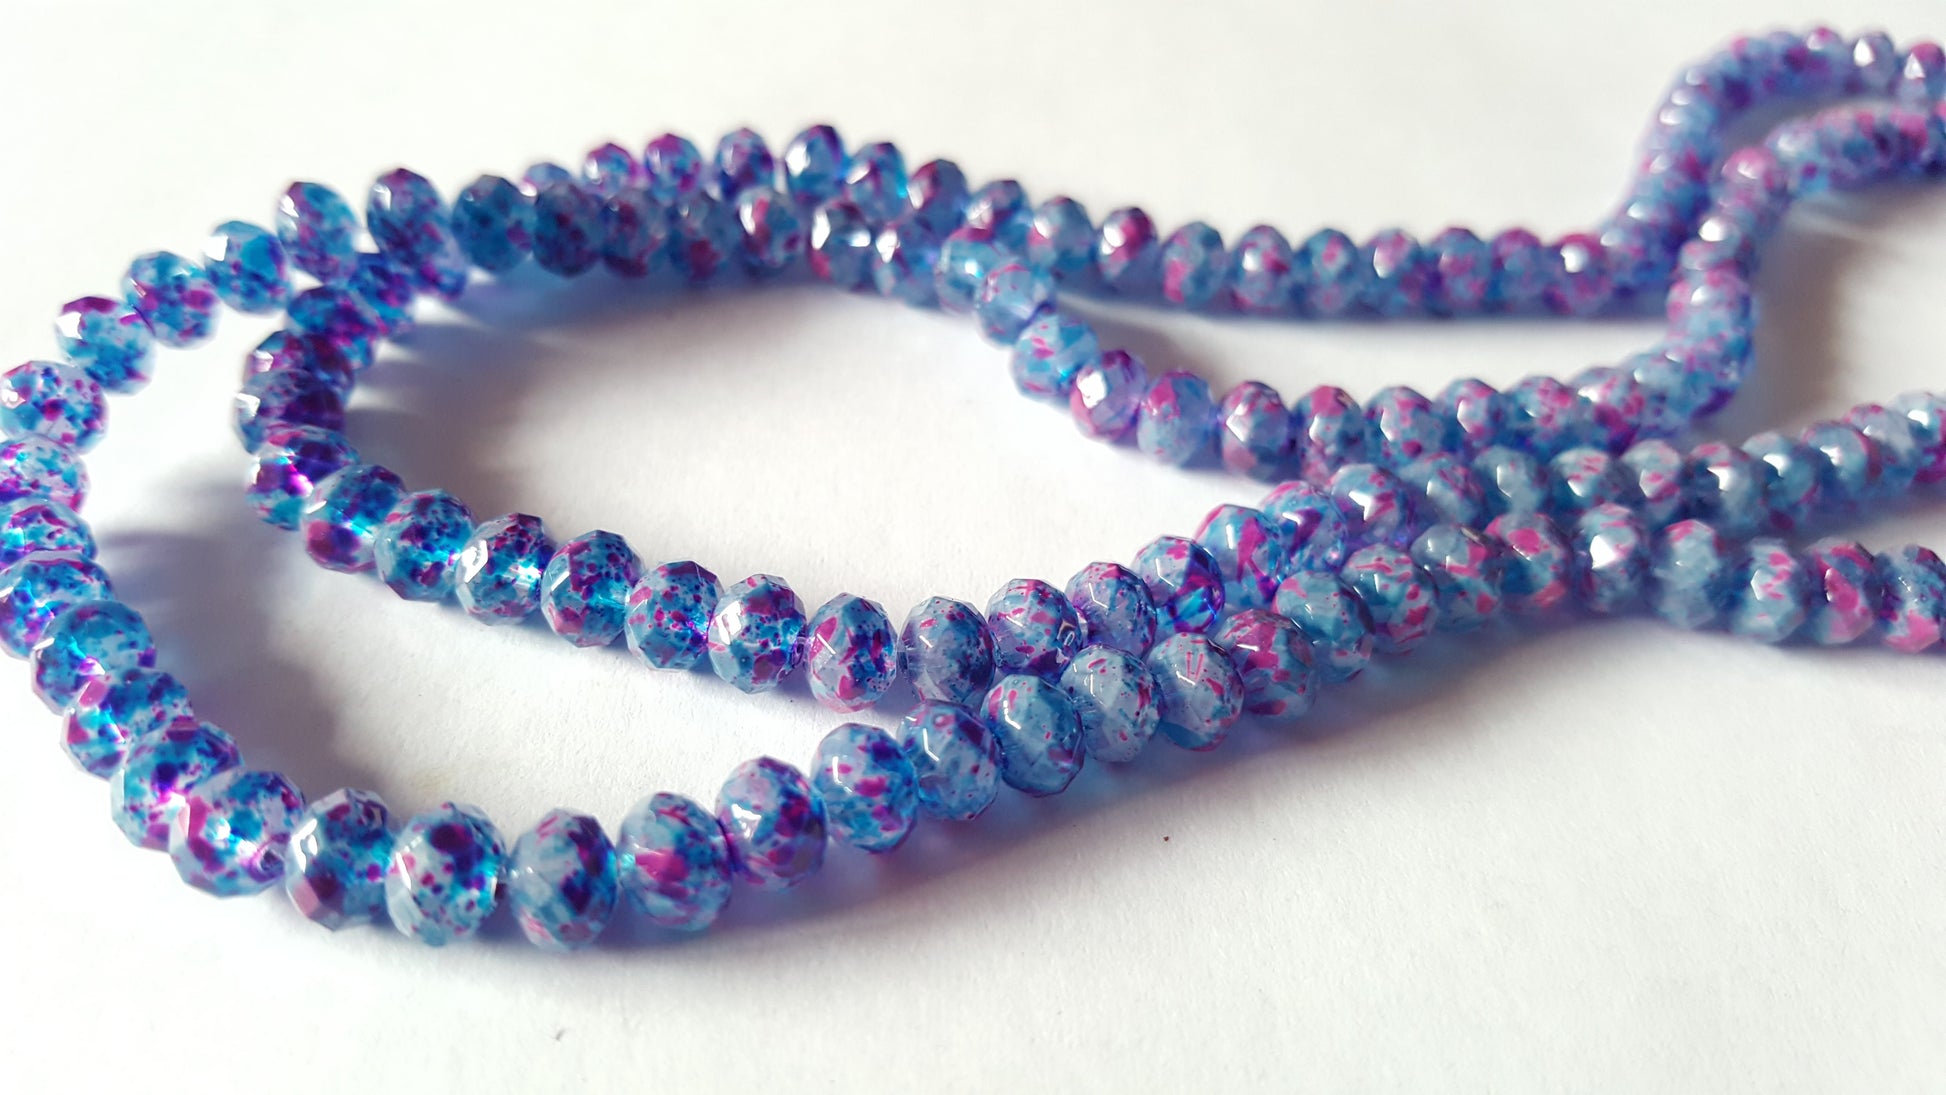 6mm mottled glass rondelle beads - pink/blue